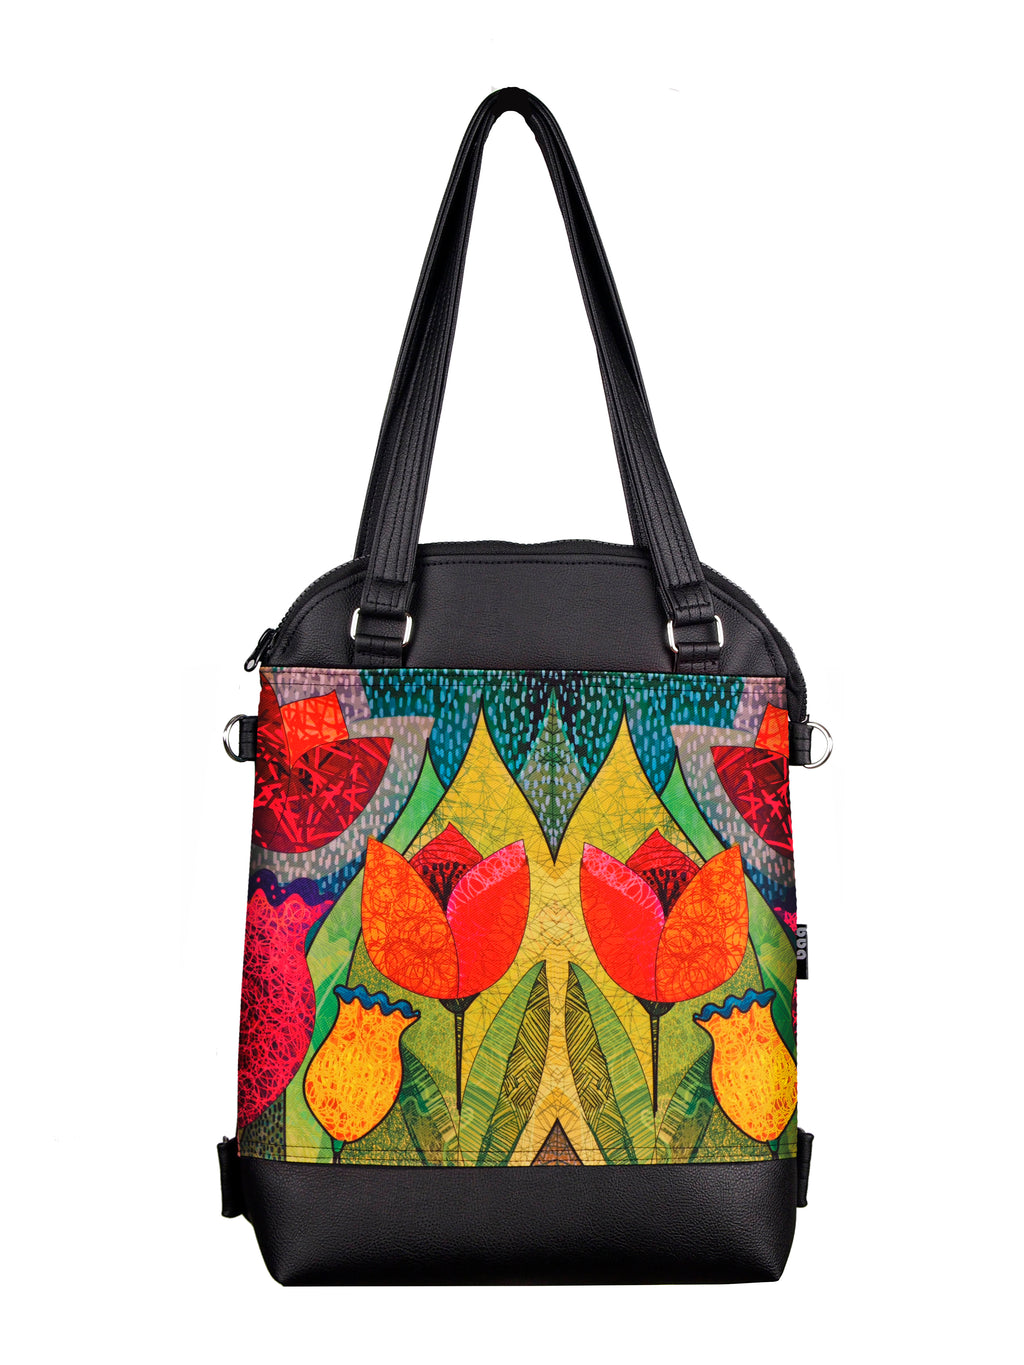 Bardo classic bag&backpack - Fairy garden - Premium  from BARDO ART WORKS - Just lv89.00! Shop now at BARDO ART WORKS